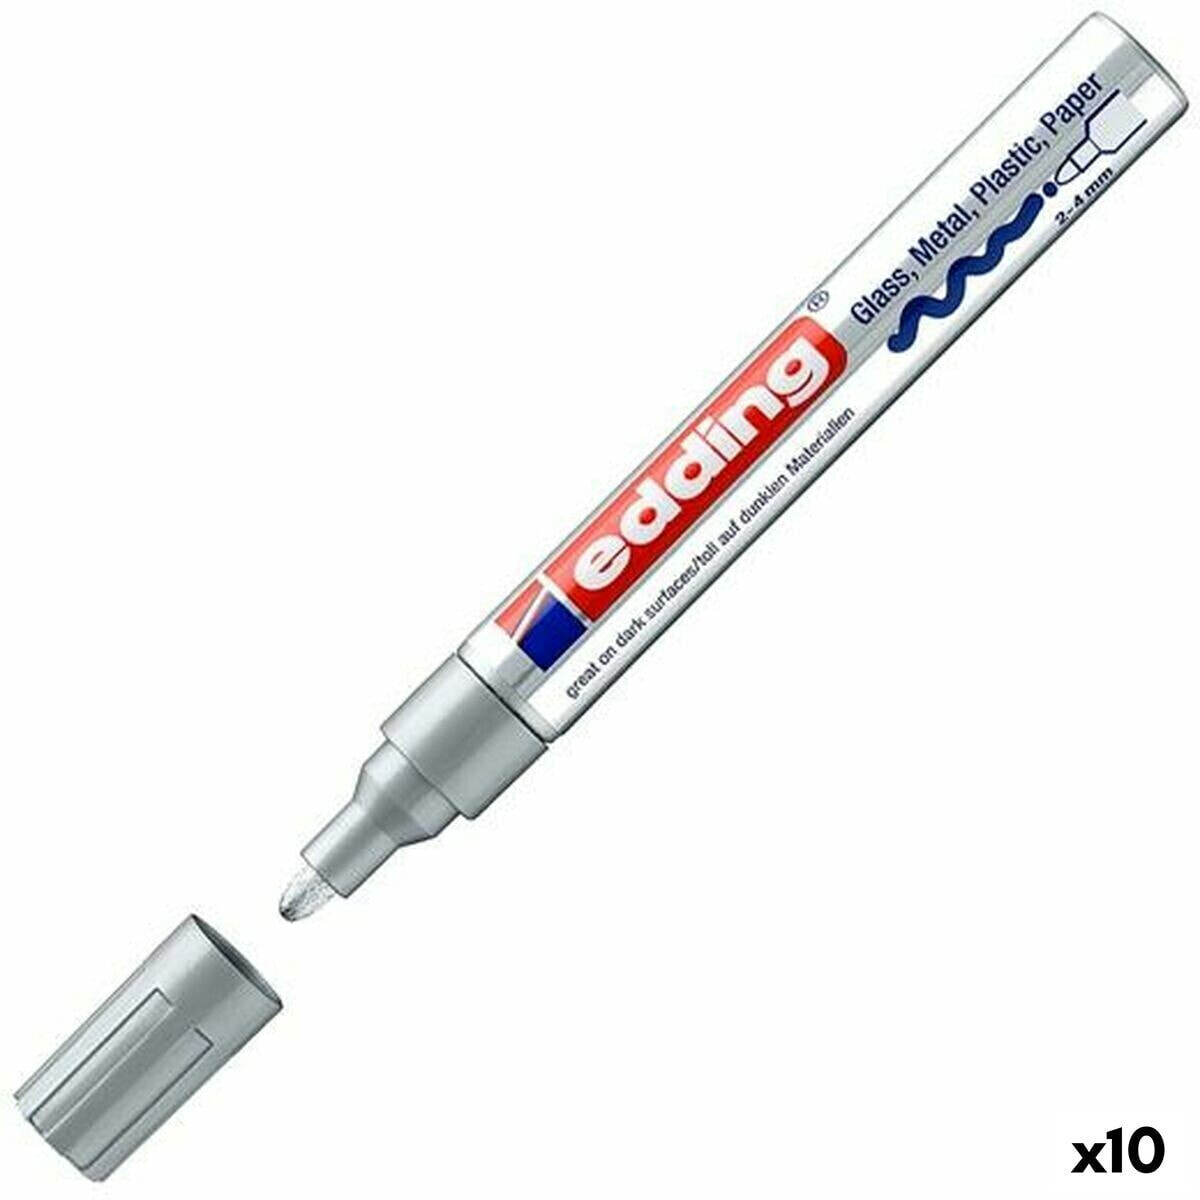 Постоянный маркер Edding 750 Серебристый 10 штук 2-4 mm (10 штук)